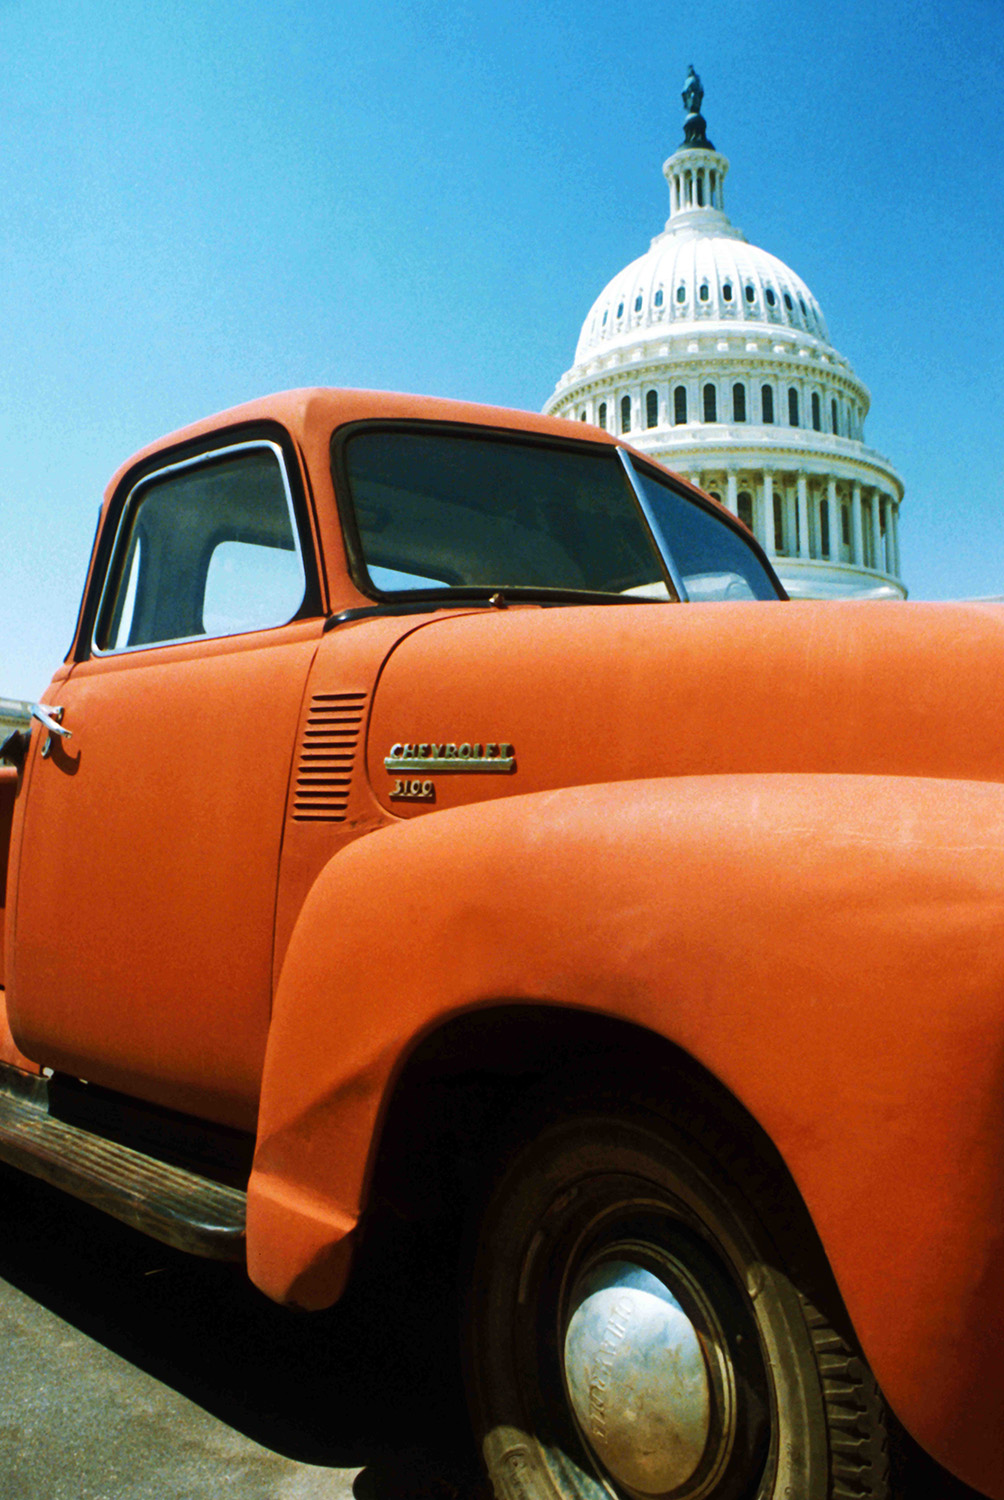 Chevrolet_3100_Pickup_Truck_Orange_Vintage_Antique_Classic_US_Capitol_Dome_Washington_DC.jpg